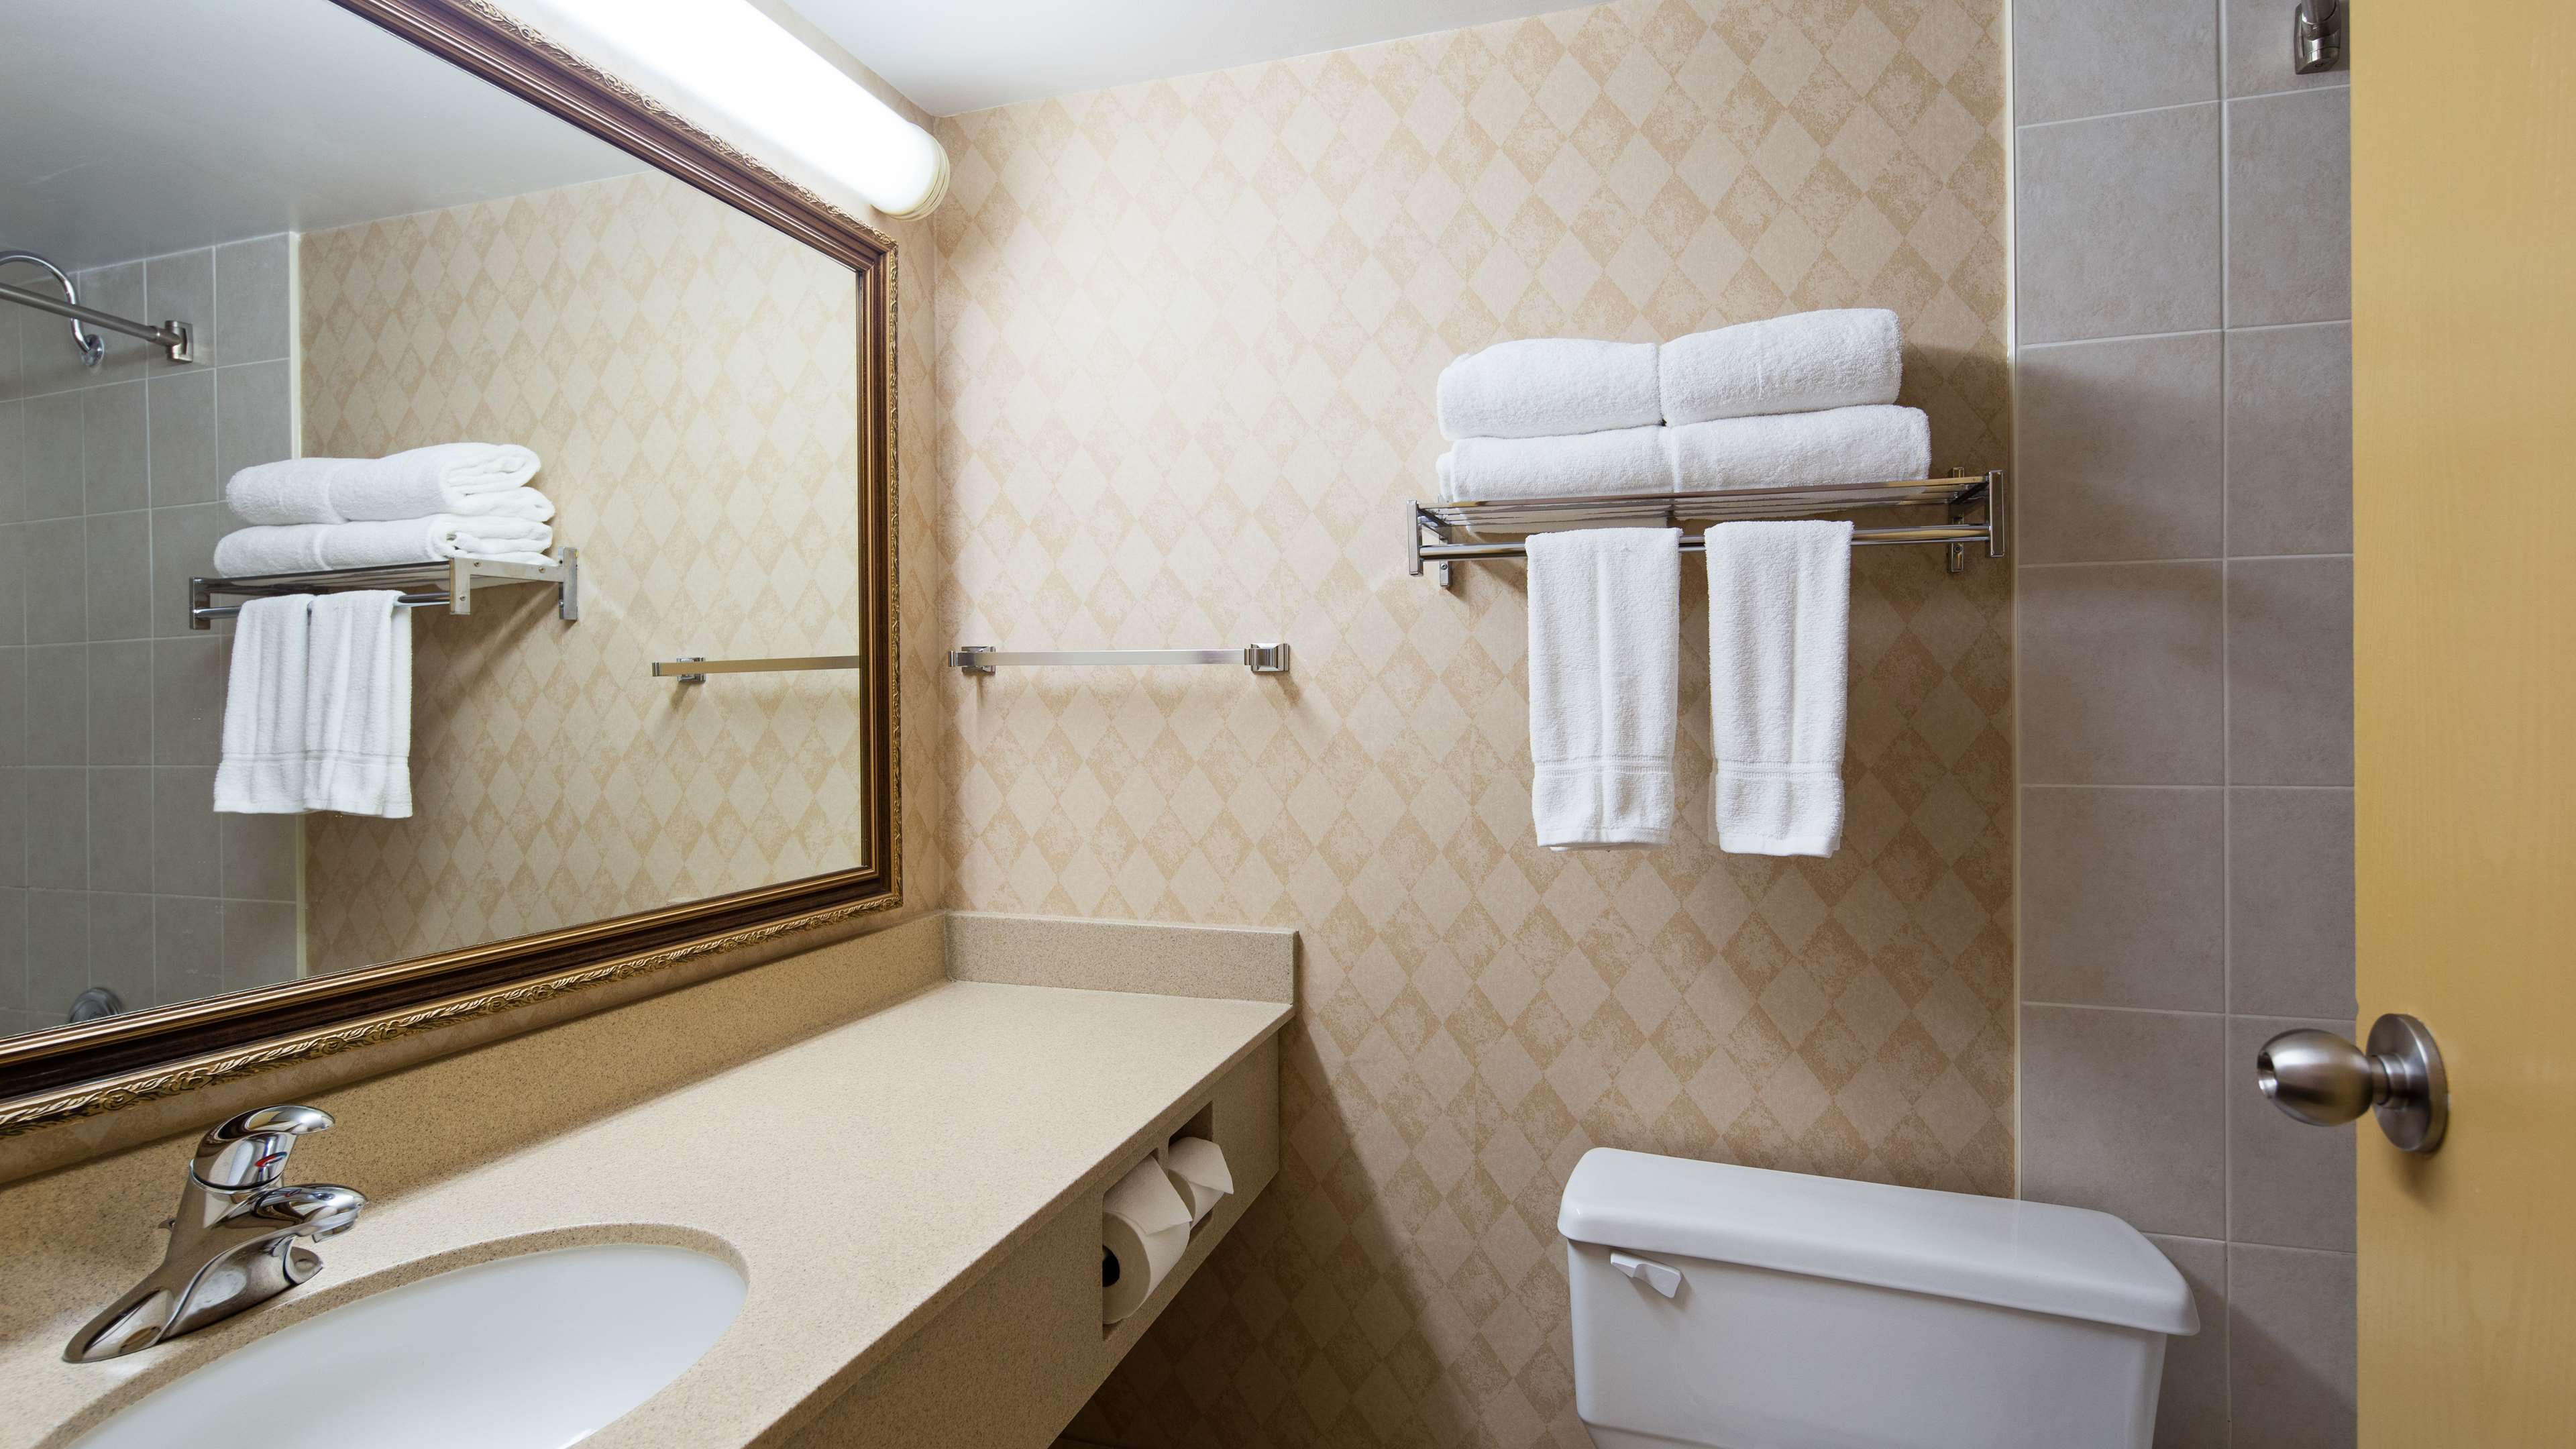 Queen Bedroom Guest Bathroom Best Western North Bay Hotel & Conference Centre North Bay (705)474-5800